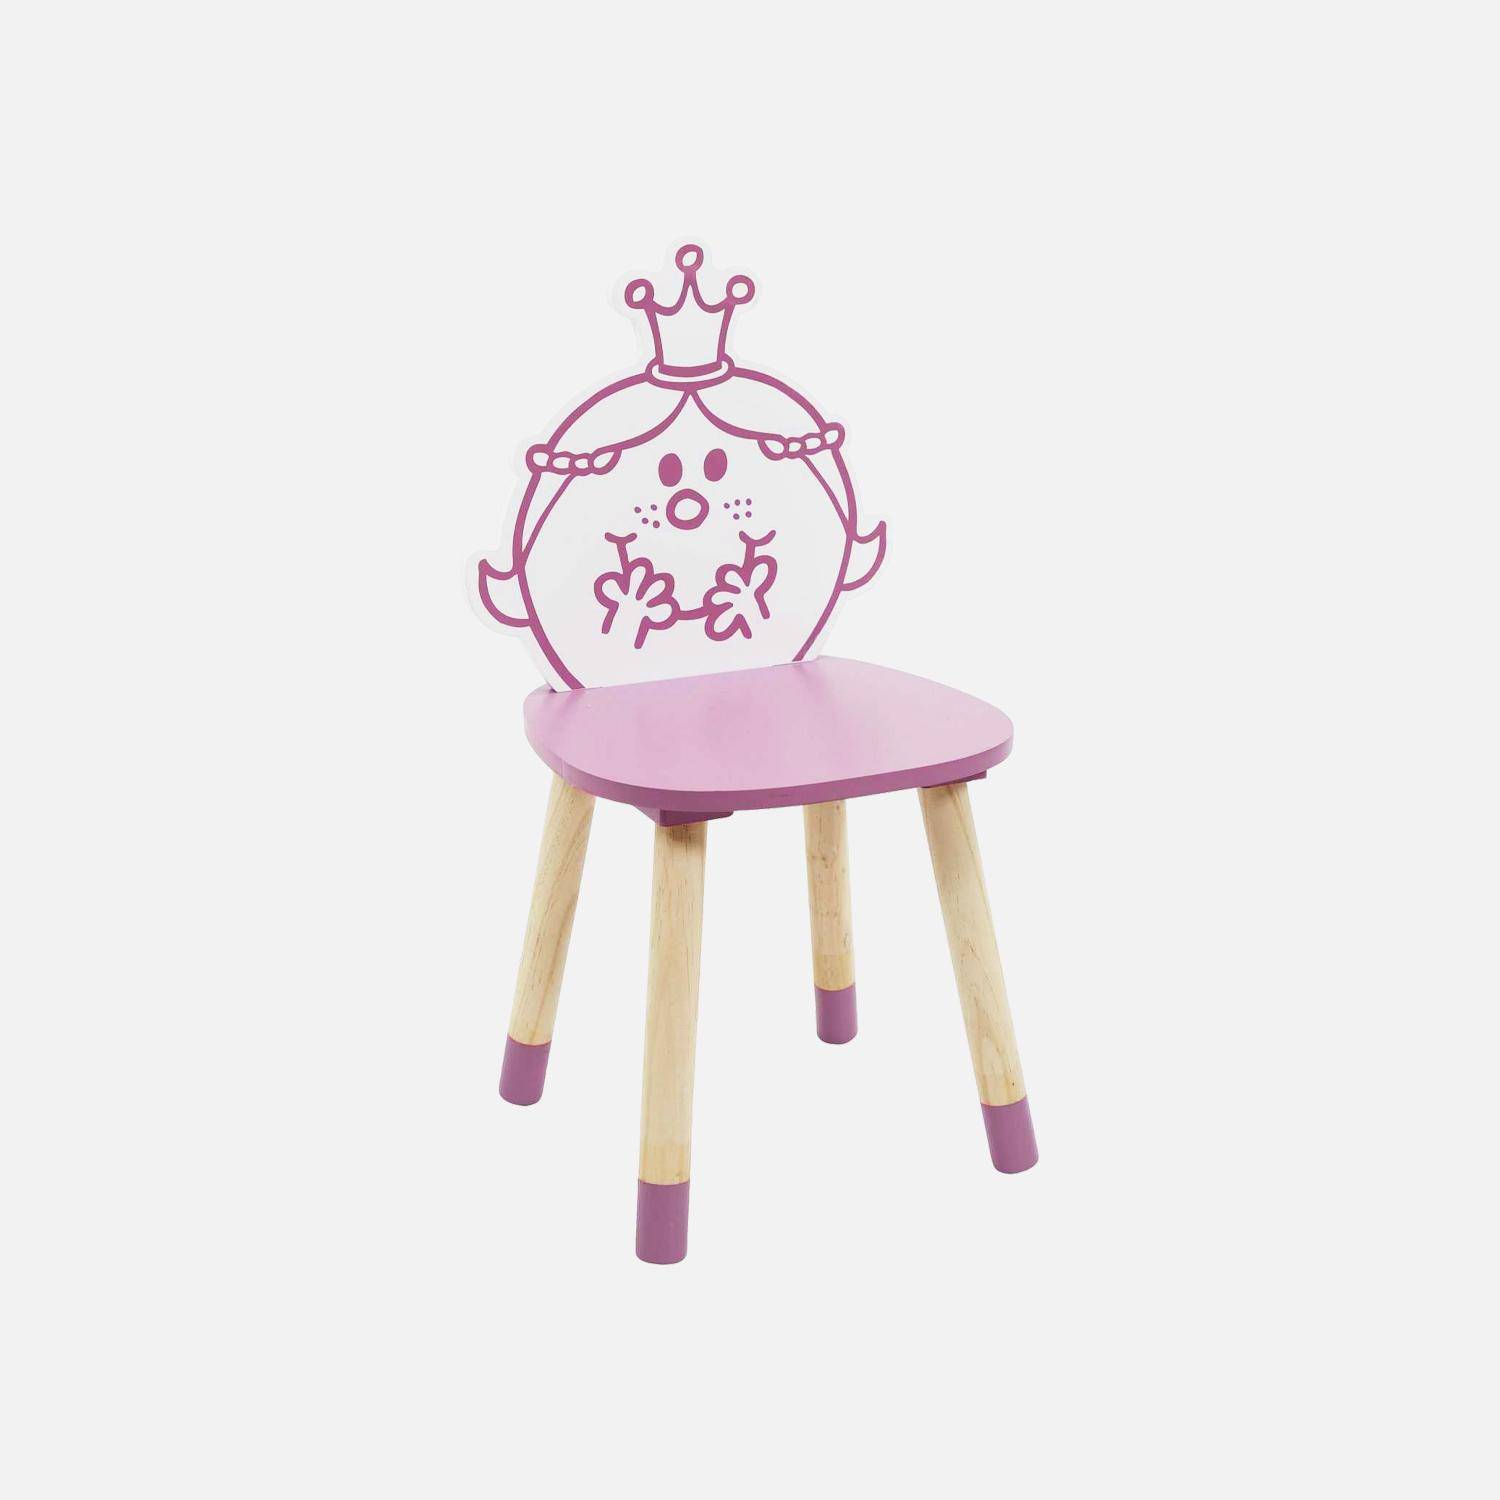 Set of 2 children's chairs, Mr. Men & Little Miss collection - Little Miss Princess, pink,sweeek,Photo4